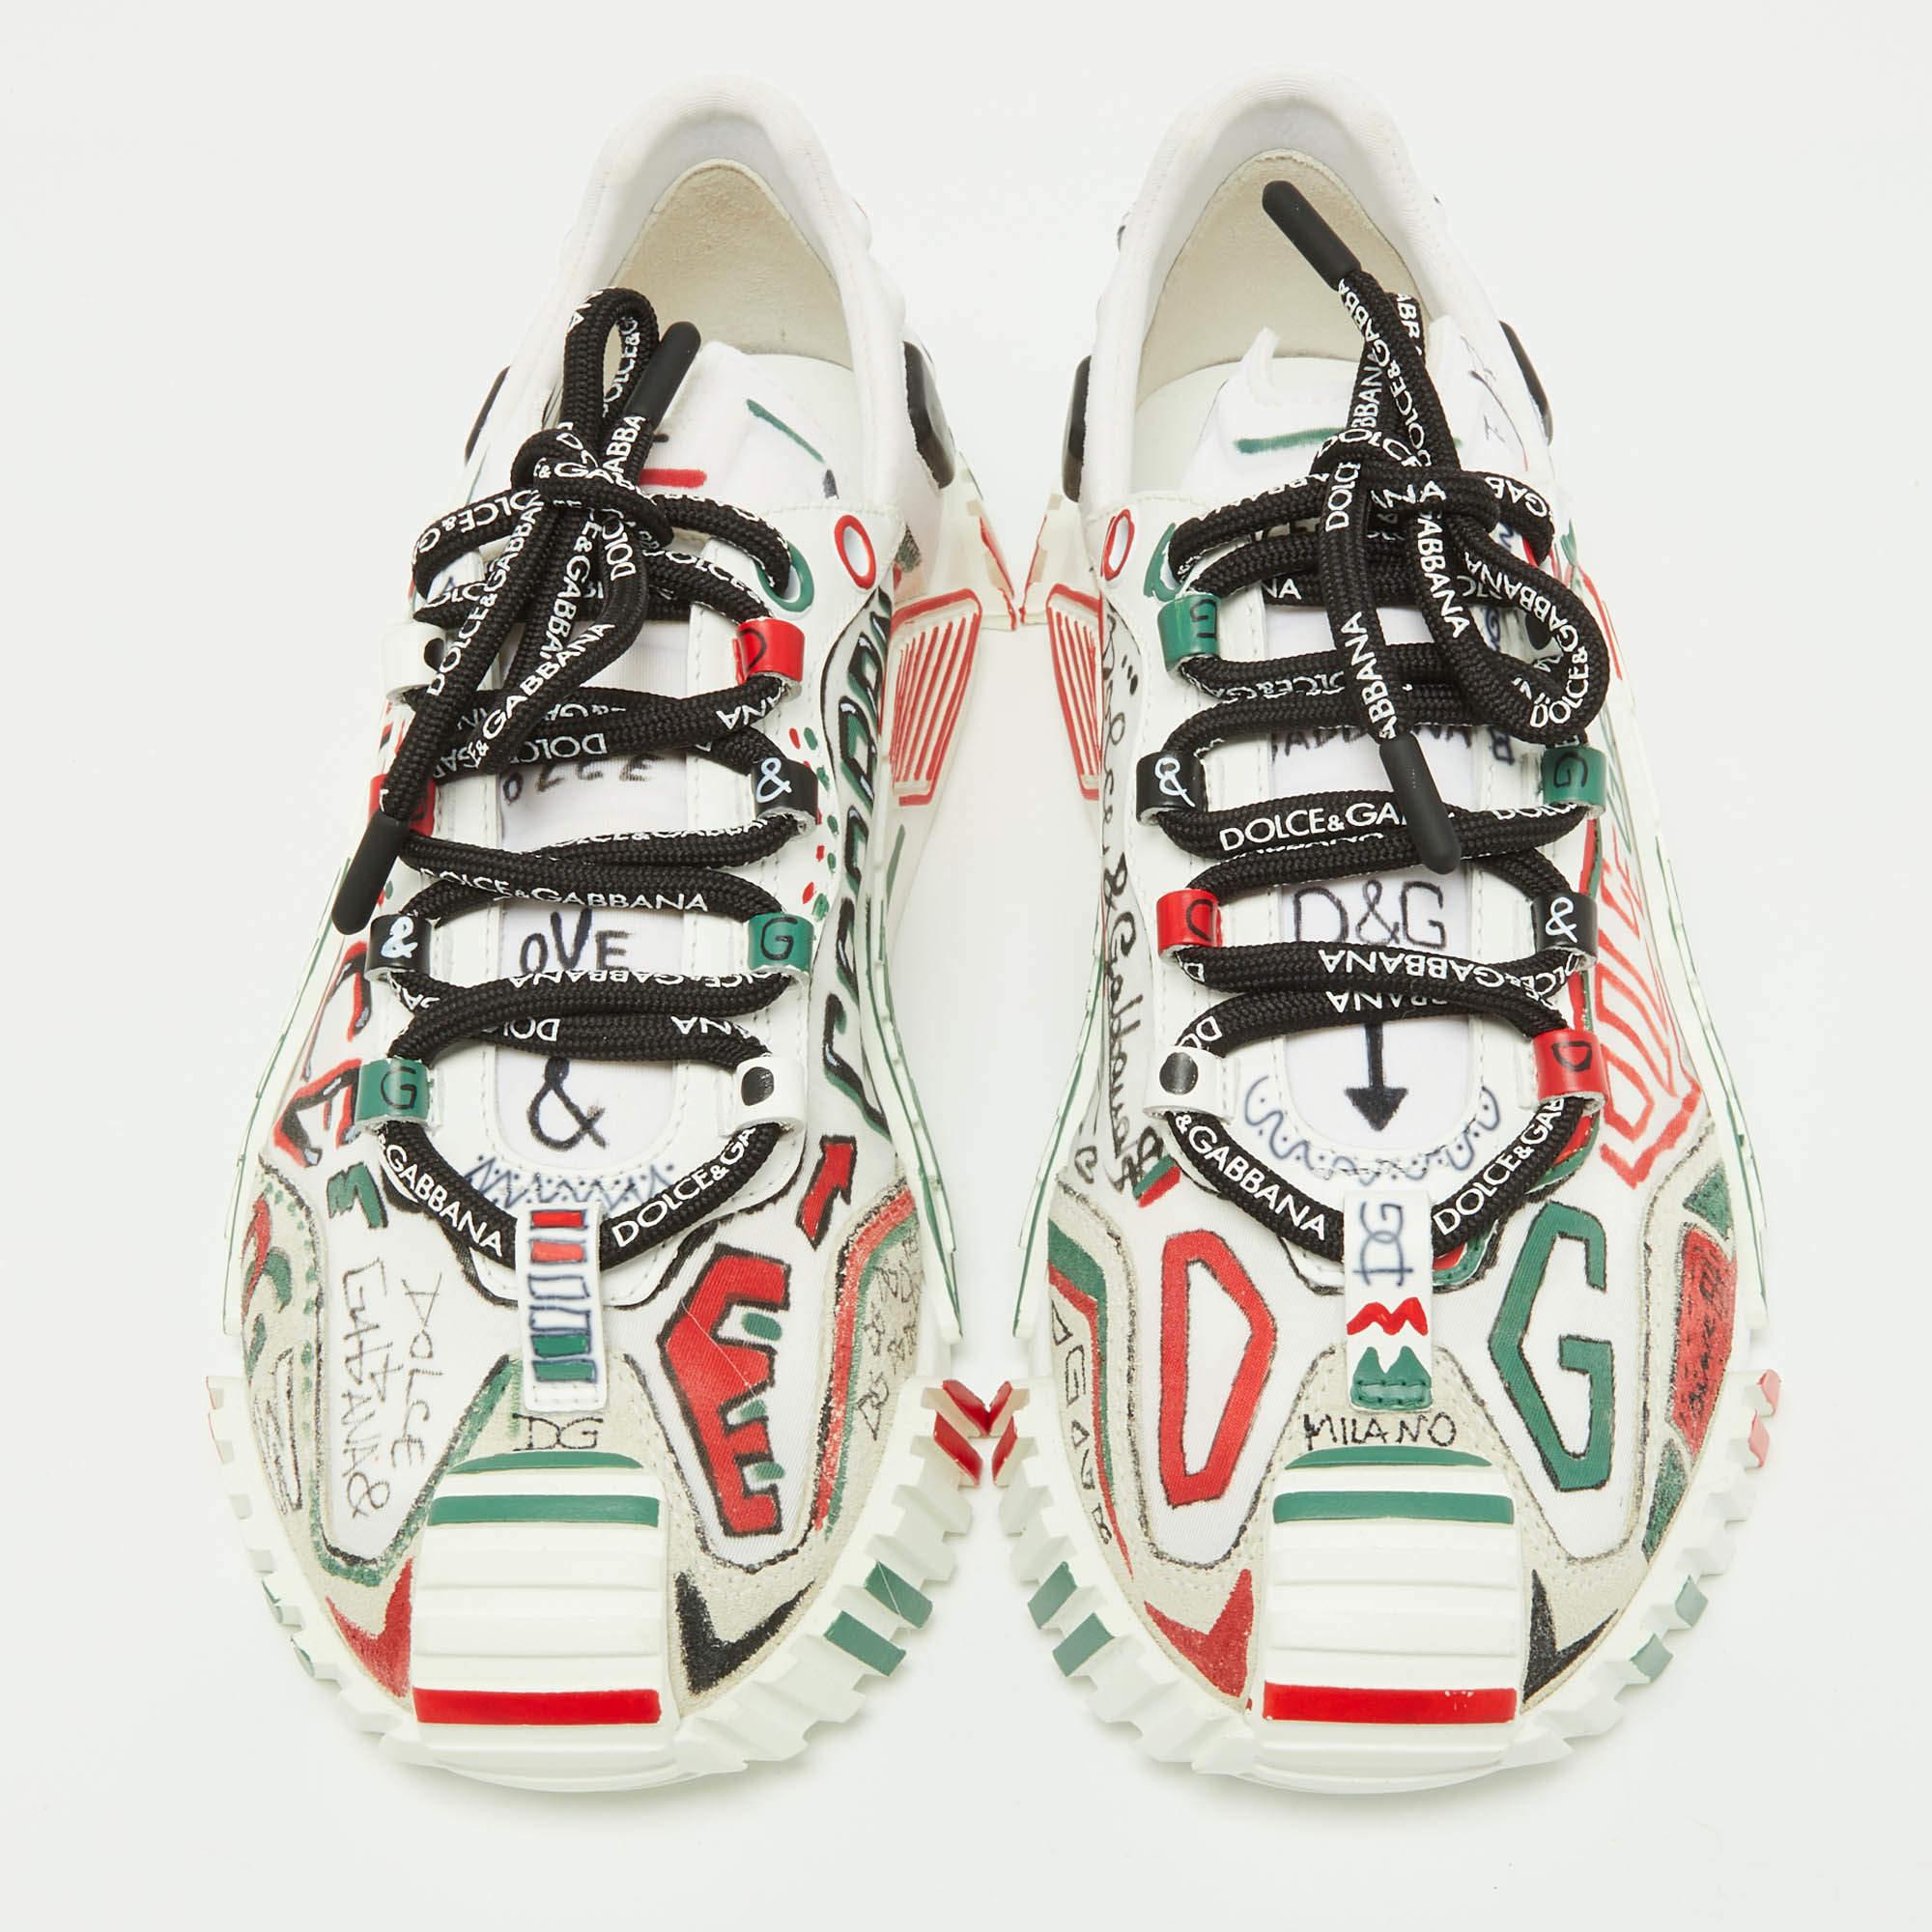 Dolce & Gabbana Multicolor Neoprene and Suede Miami Ns1 Low Top Sneakers Size 38 In Good Condition For Sale In Dubai, Al Qouz 2